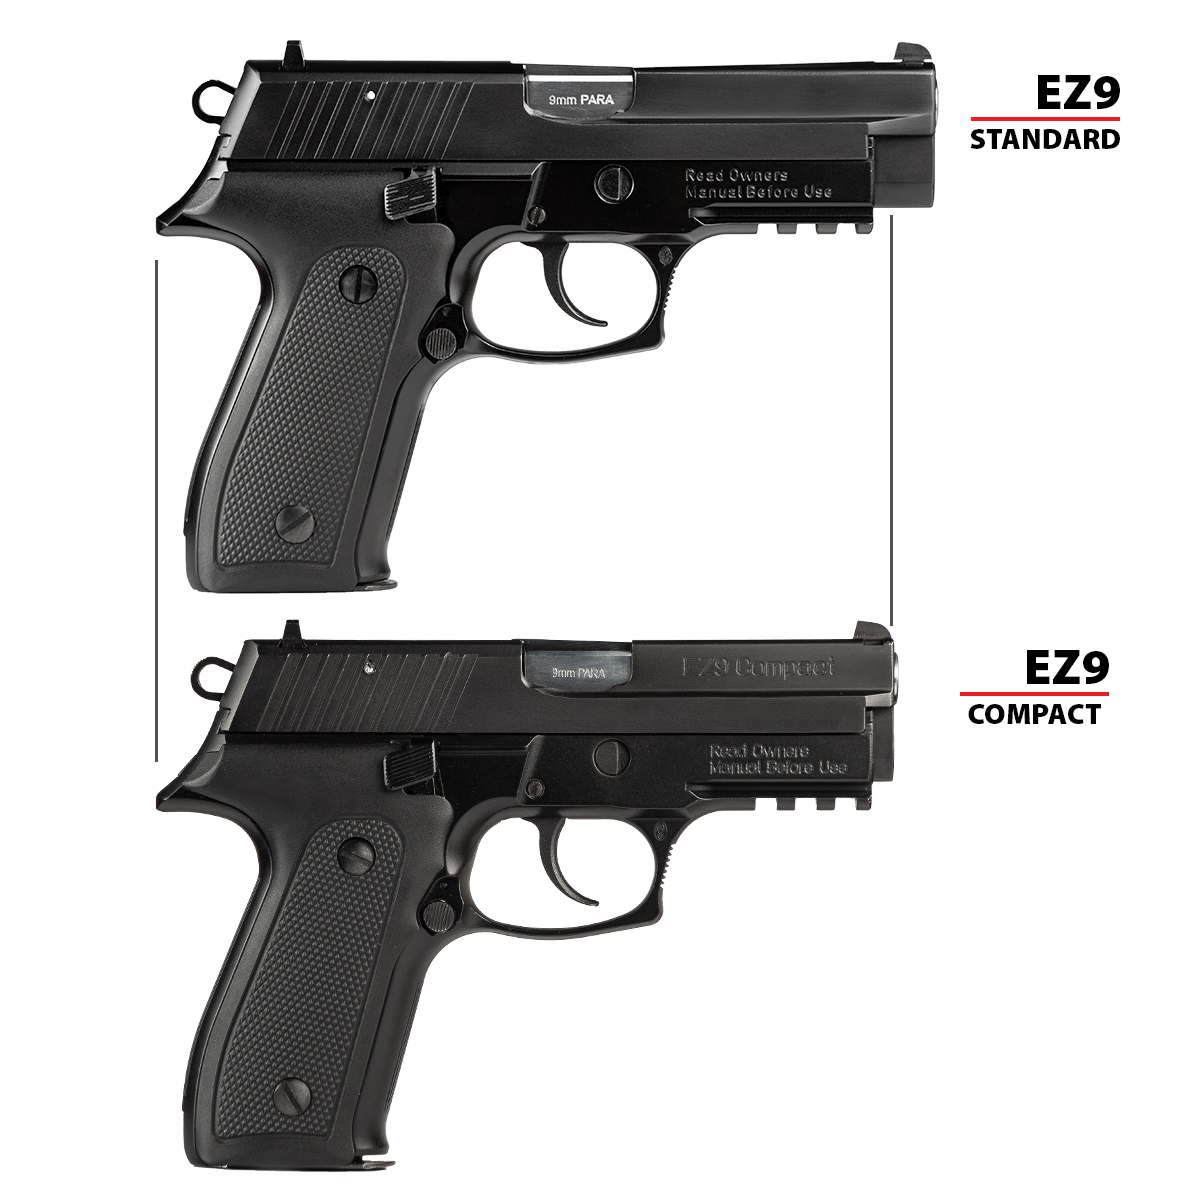 ez9 pistol standard compact compare view